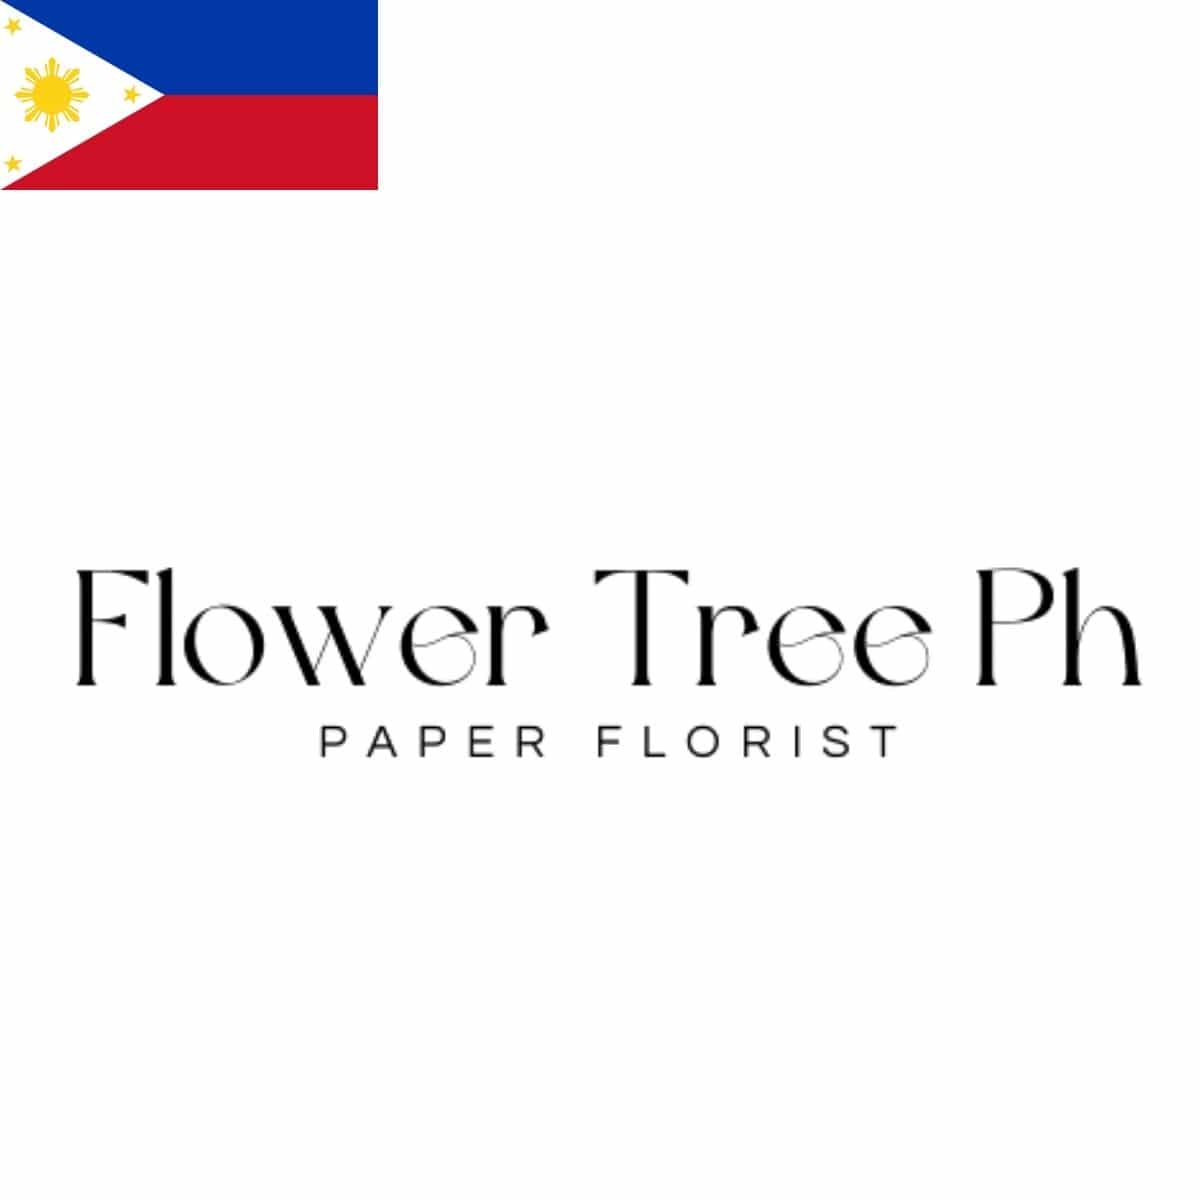 Flower Tree Ph